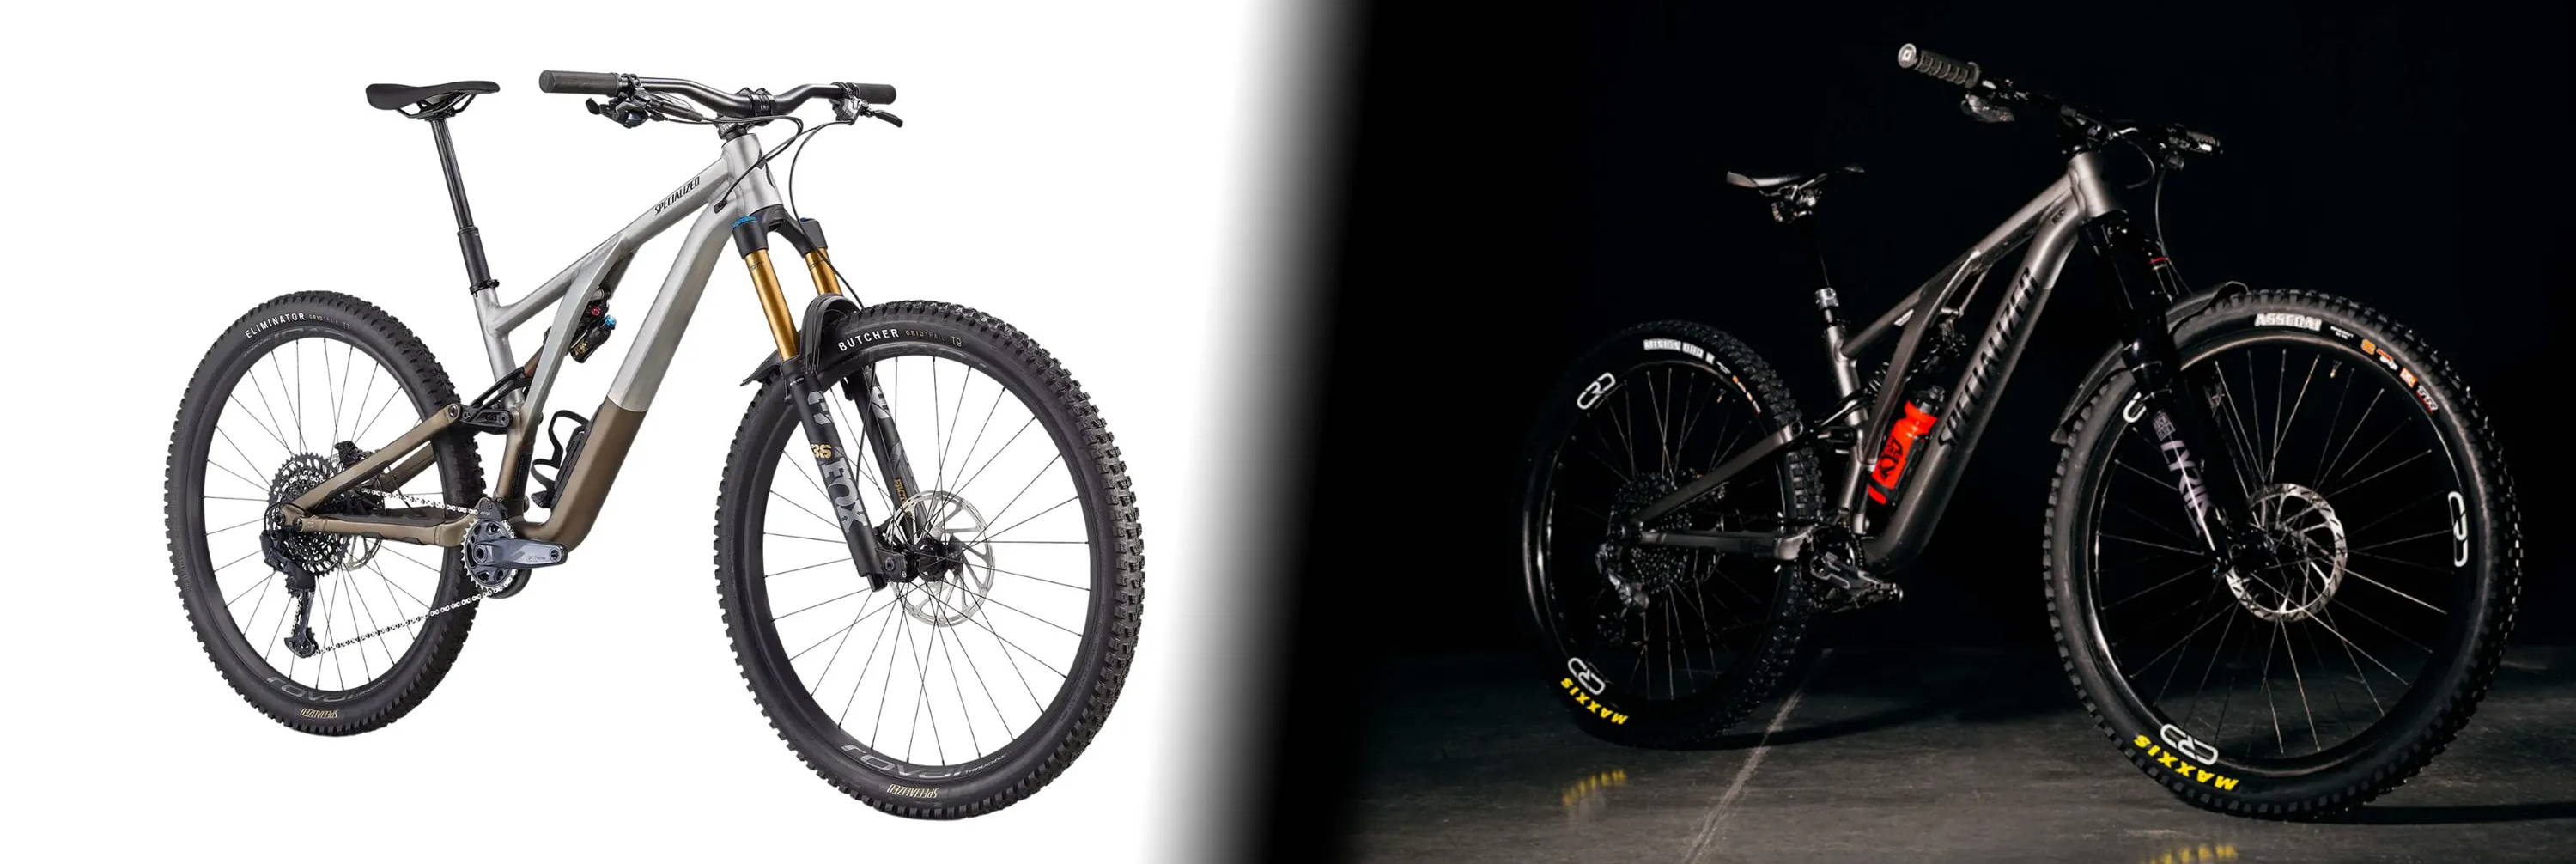 spec mountain bike build vs a custom mountain bike build with a specialized stumpjumper evo